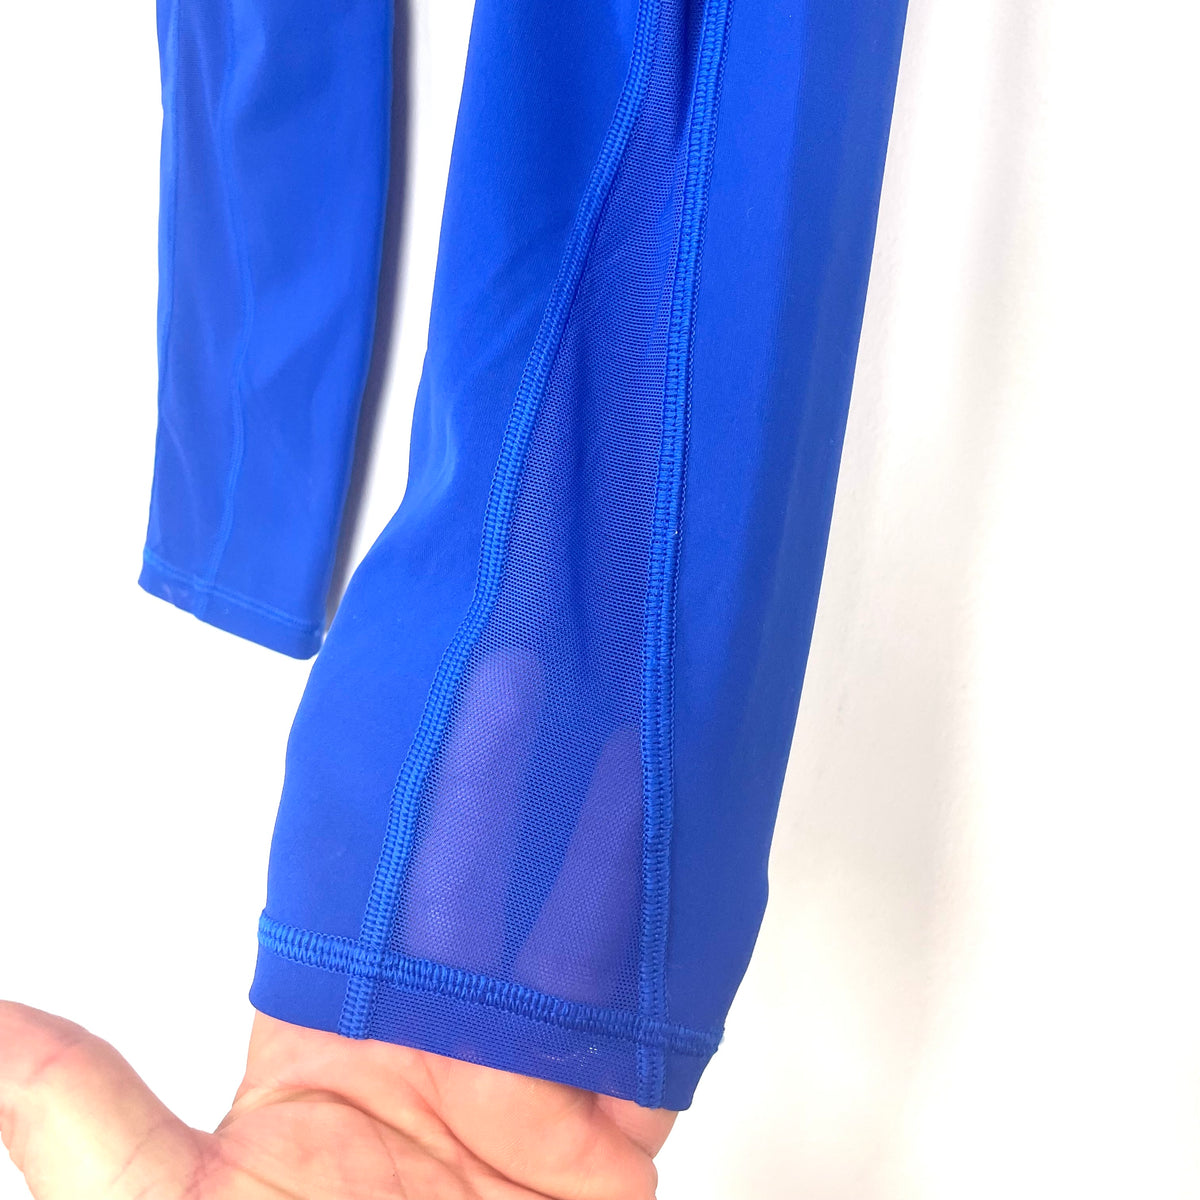 Lululemon Royal Blue with Mesh Sides Cropped Leggings- Size 4 ( Inseam 24.75